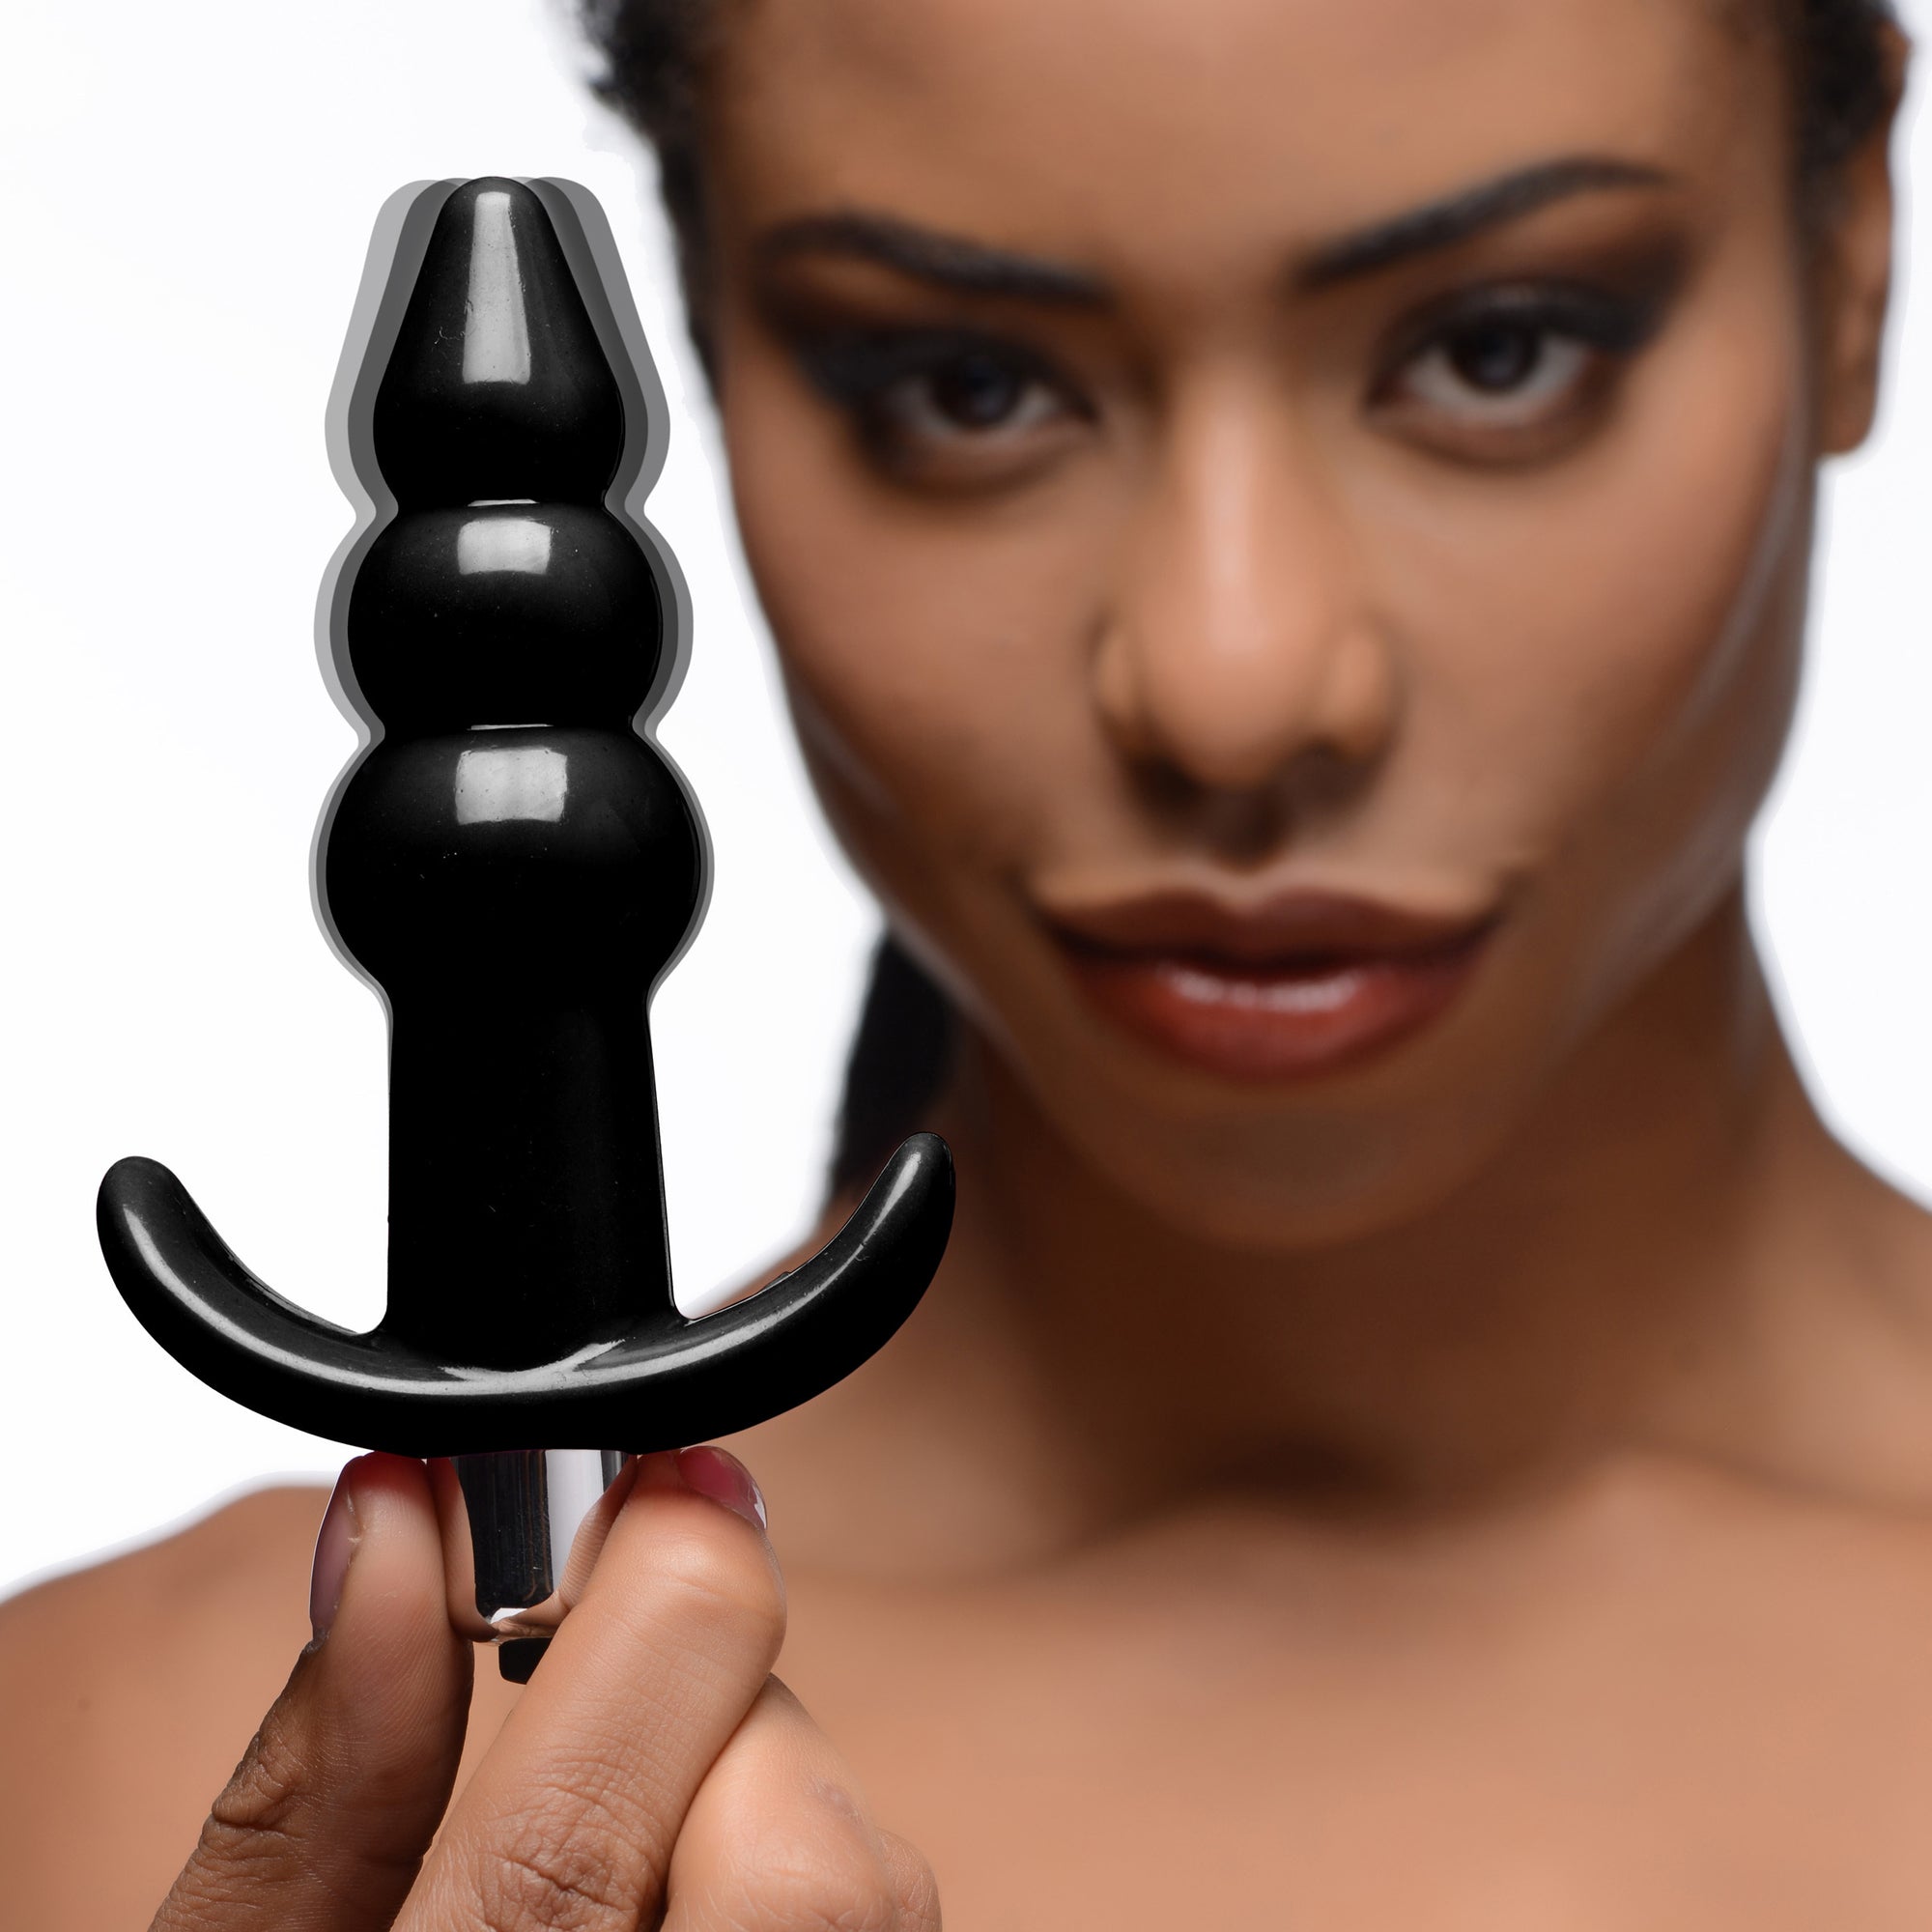 Ribbed Vibrating Butt Plug - Black 
Anal Toys
Frisky Cupid’s Secret Stash